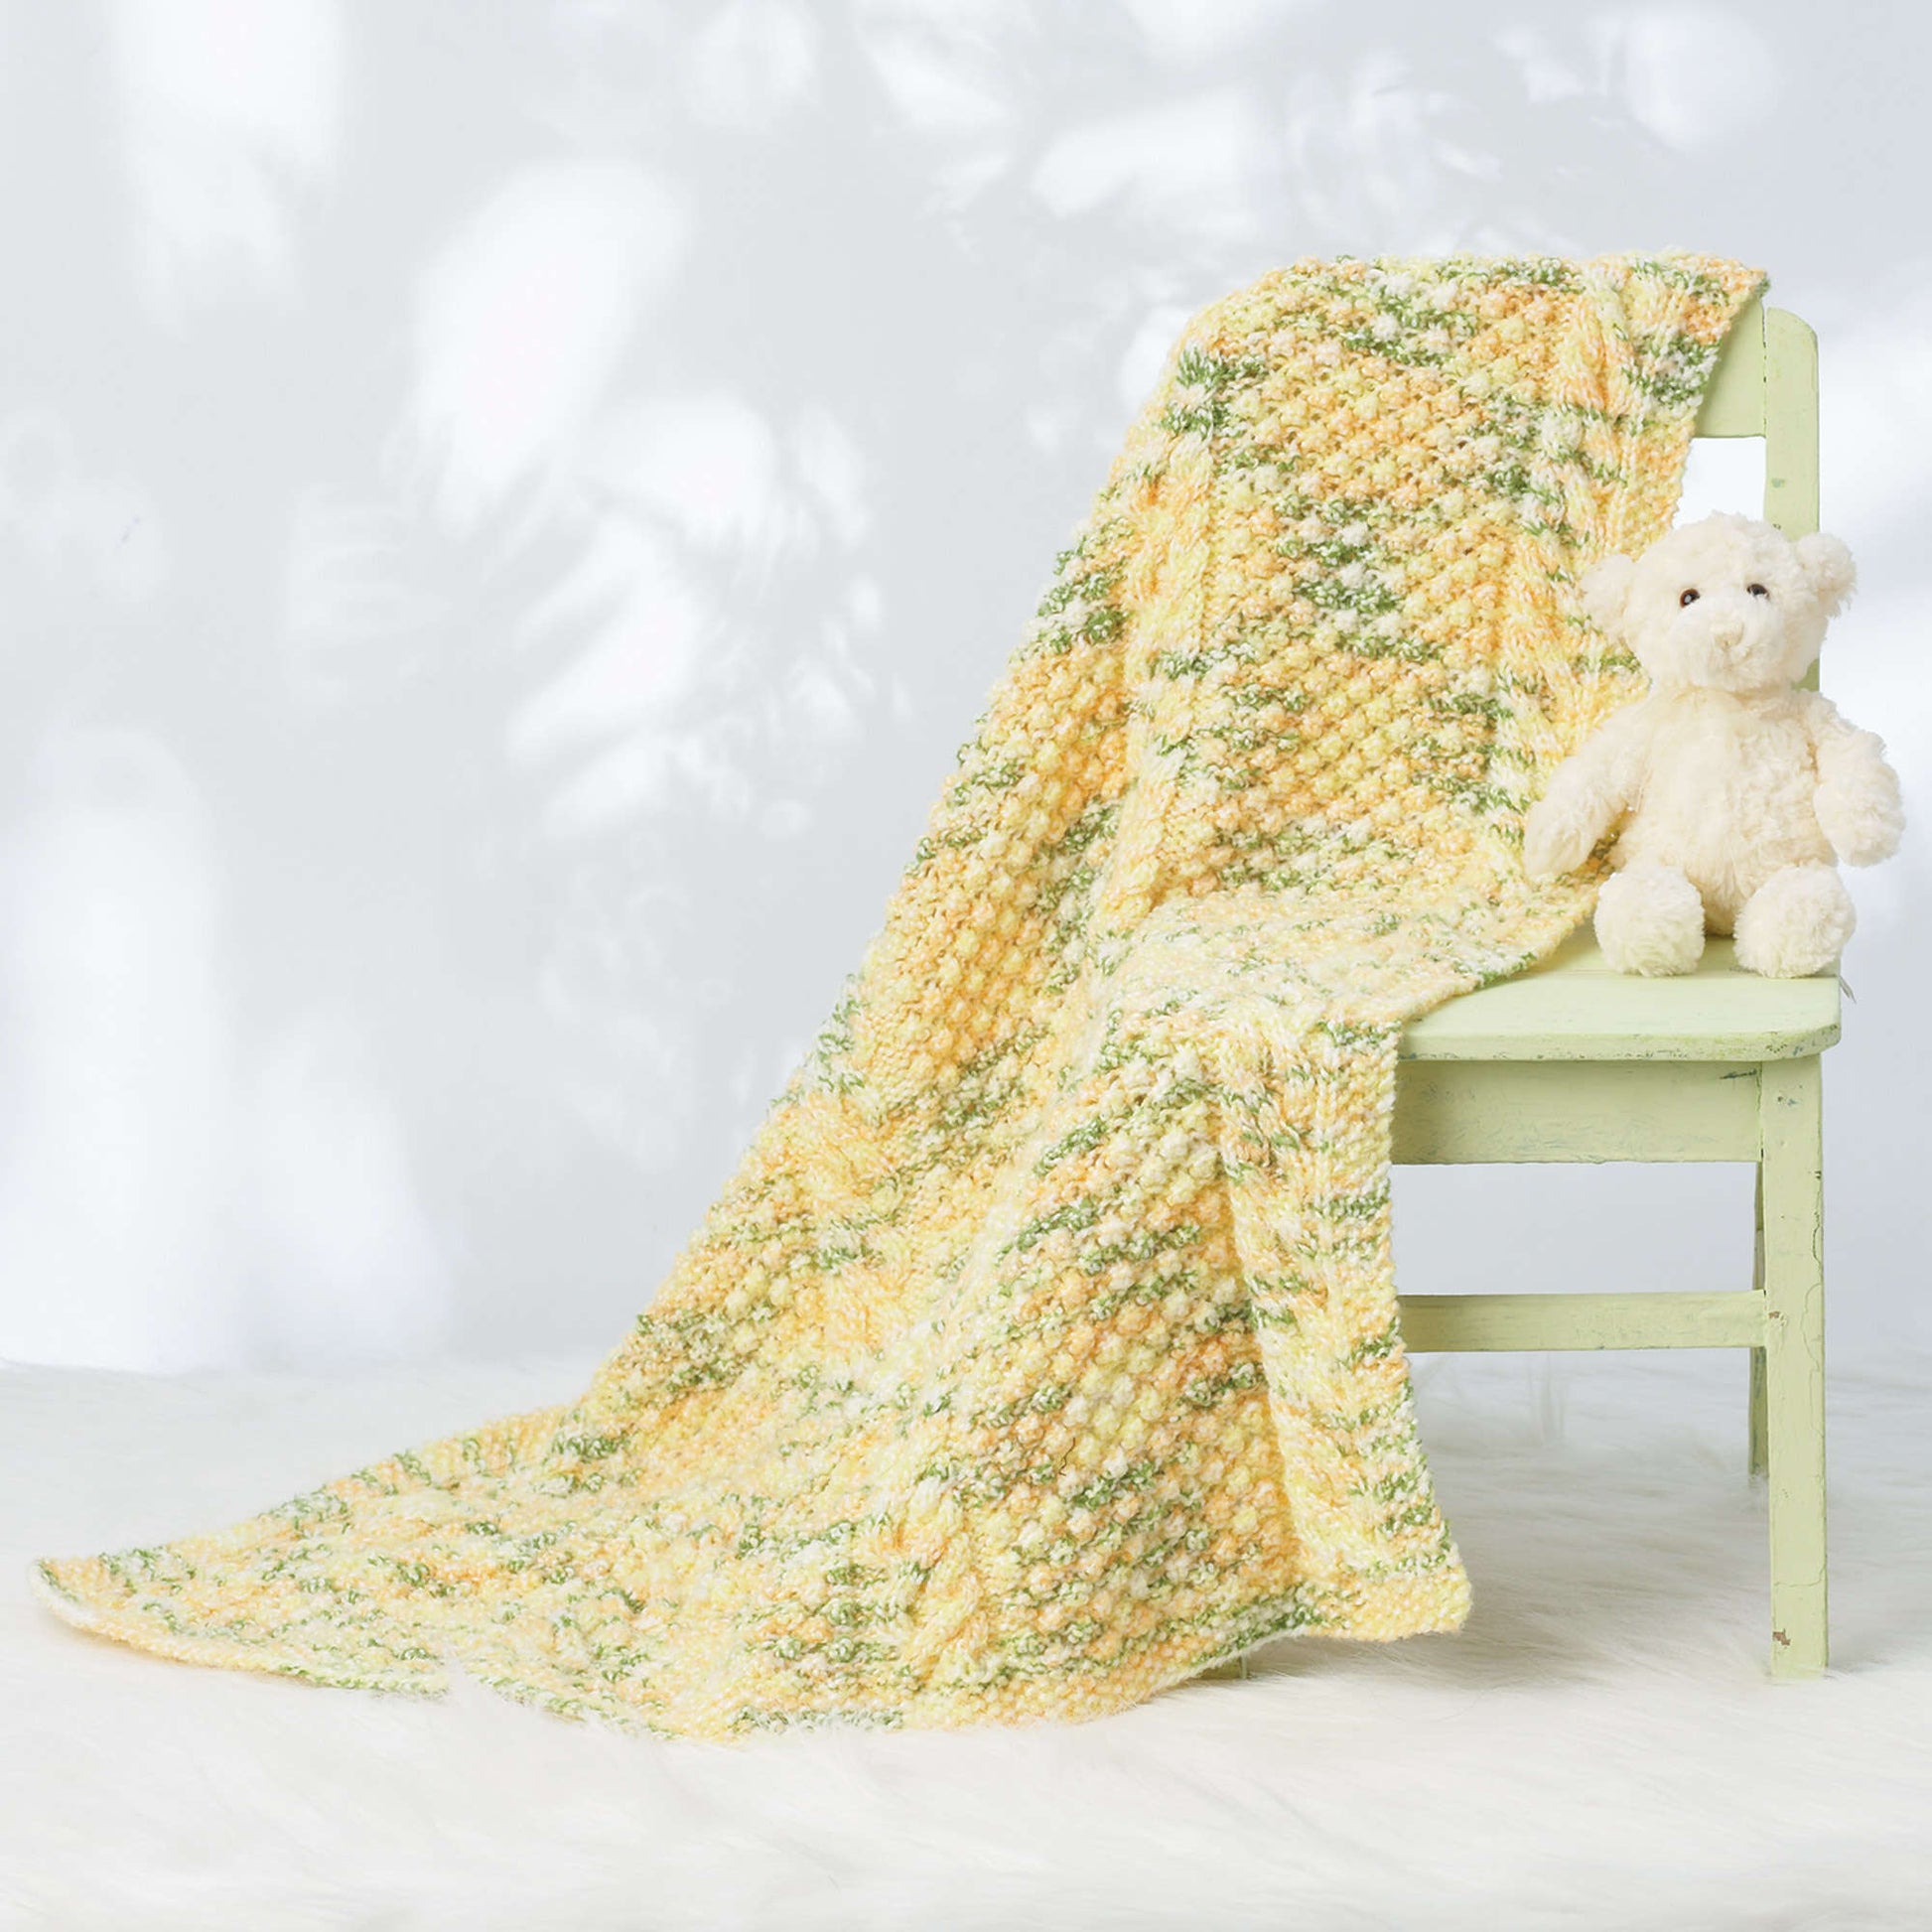 Bernat Cable Knit Baby Blanket Knit Blanket made in Bernat Li'l Tots yarn